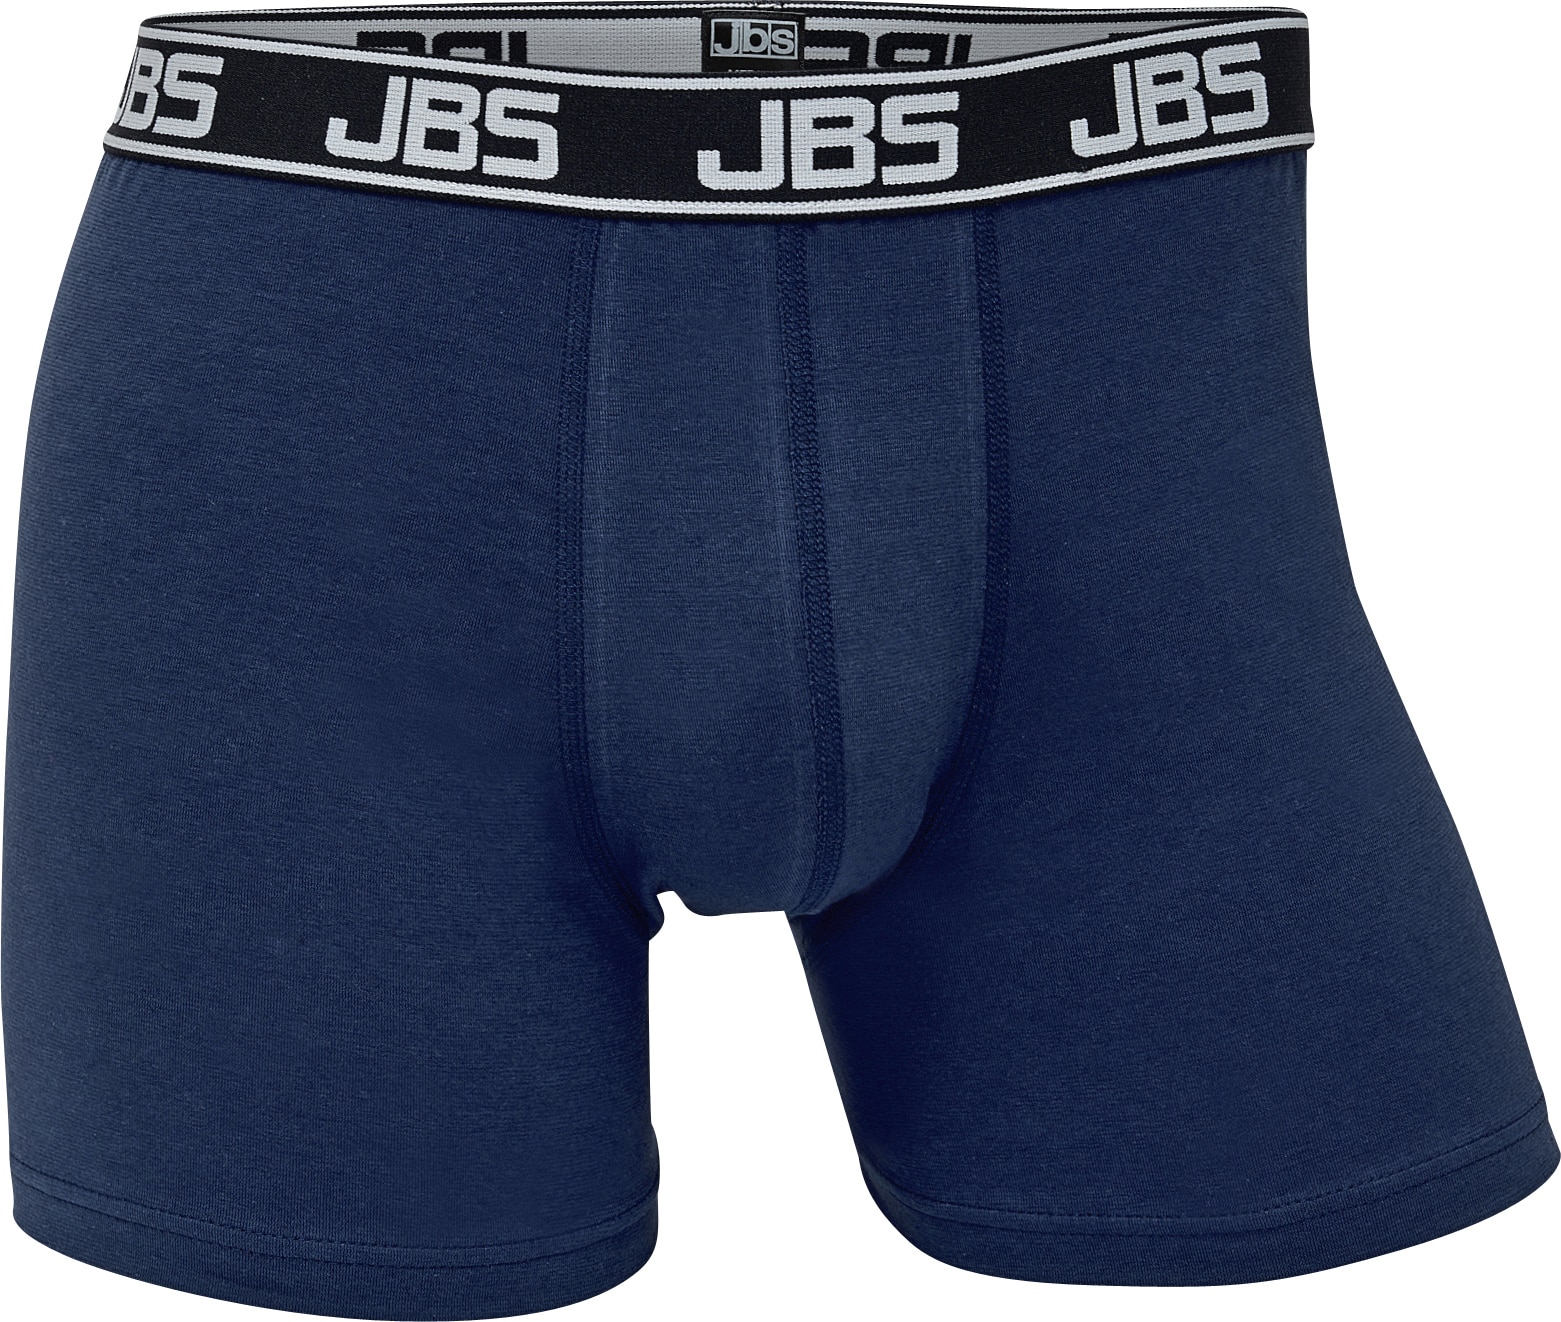 JBS tights - S - NAVY